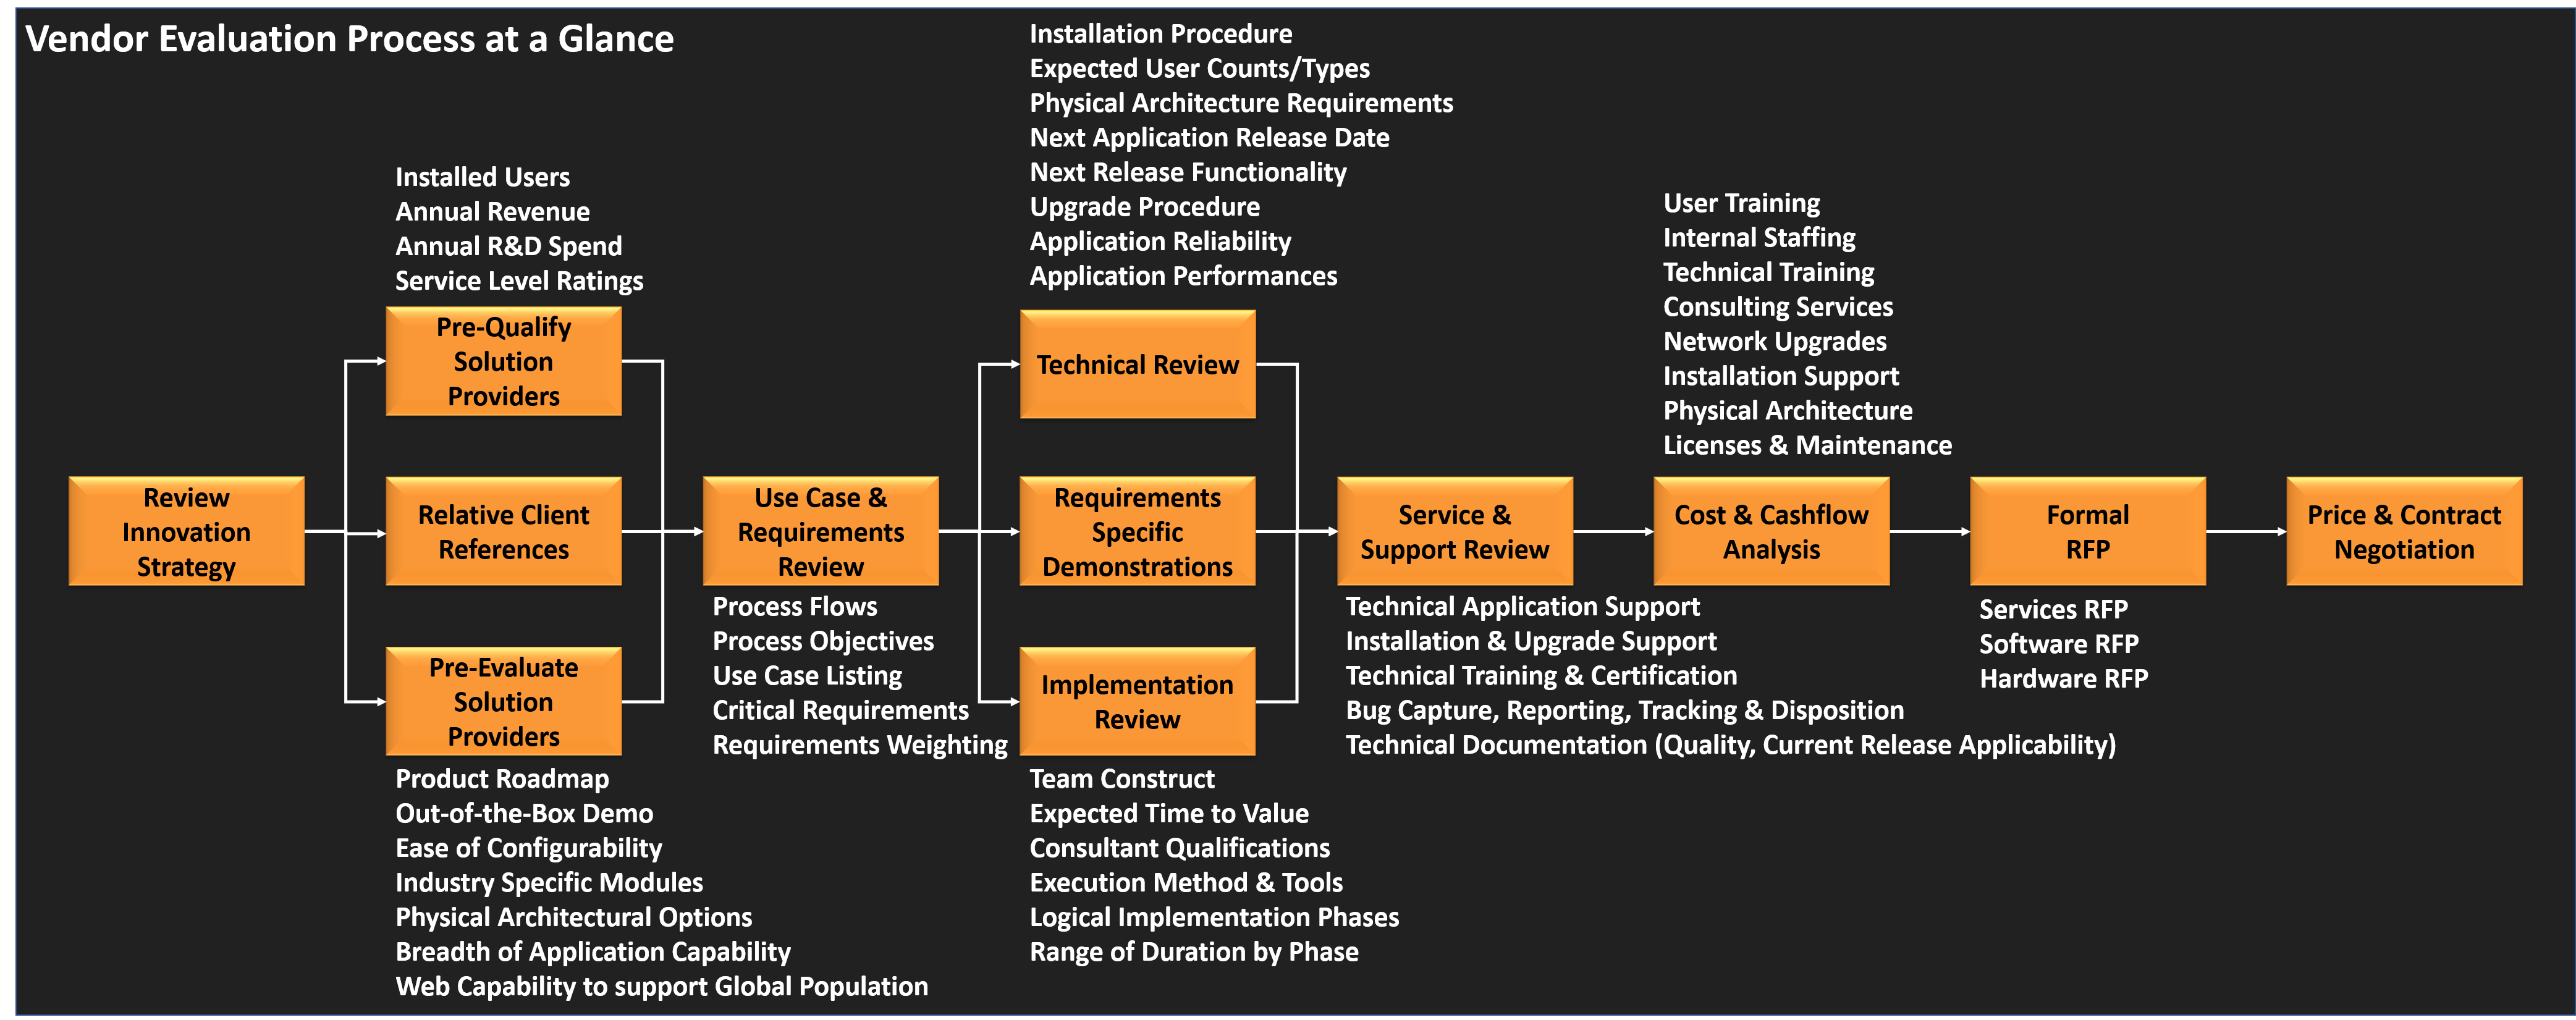 Vendor Evaluation Process Graphic